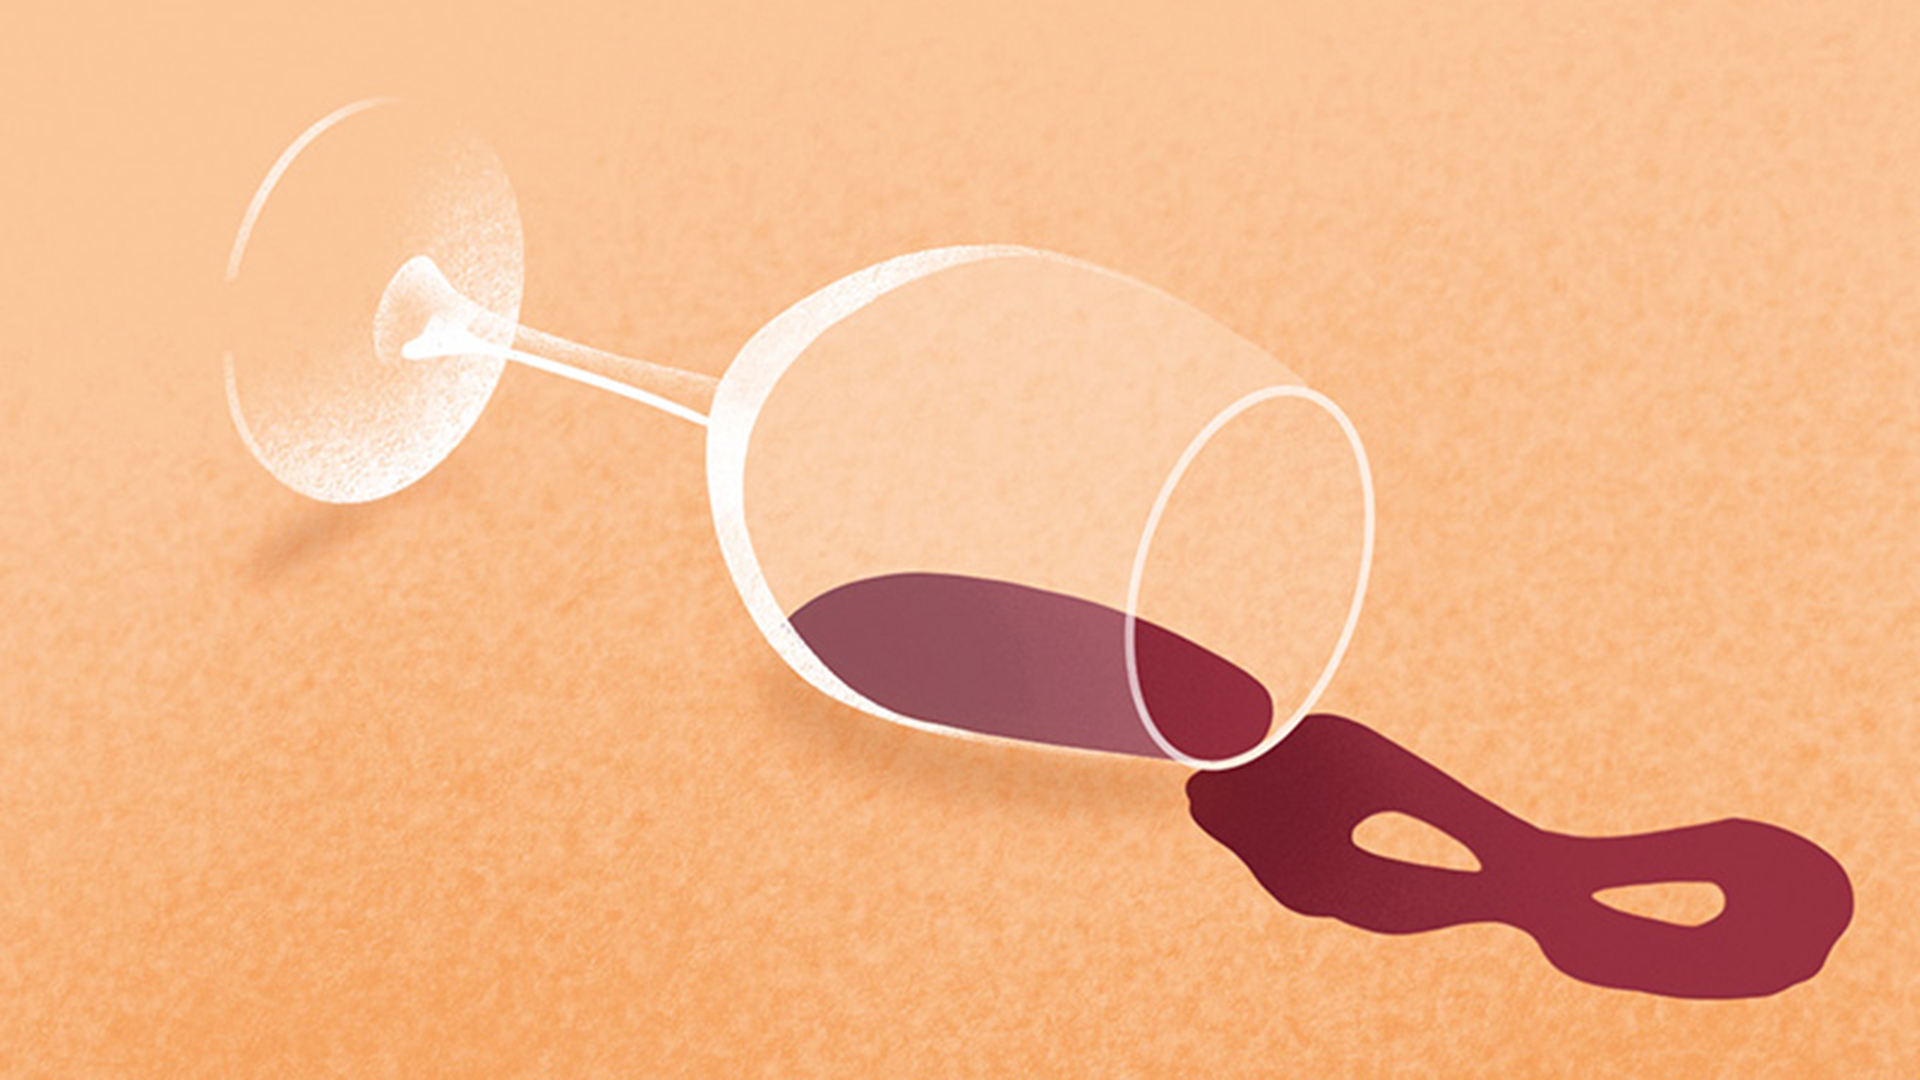 Illustration of a spilt glass of wine